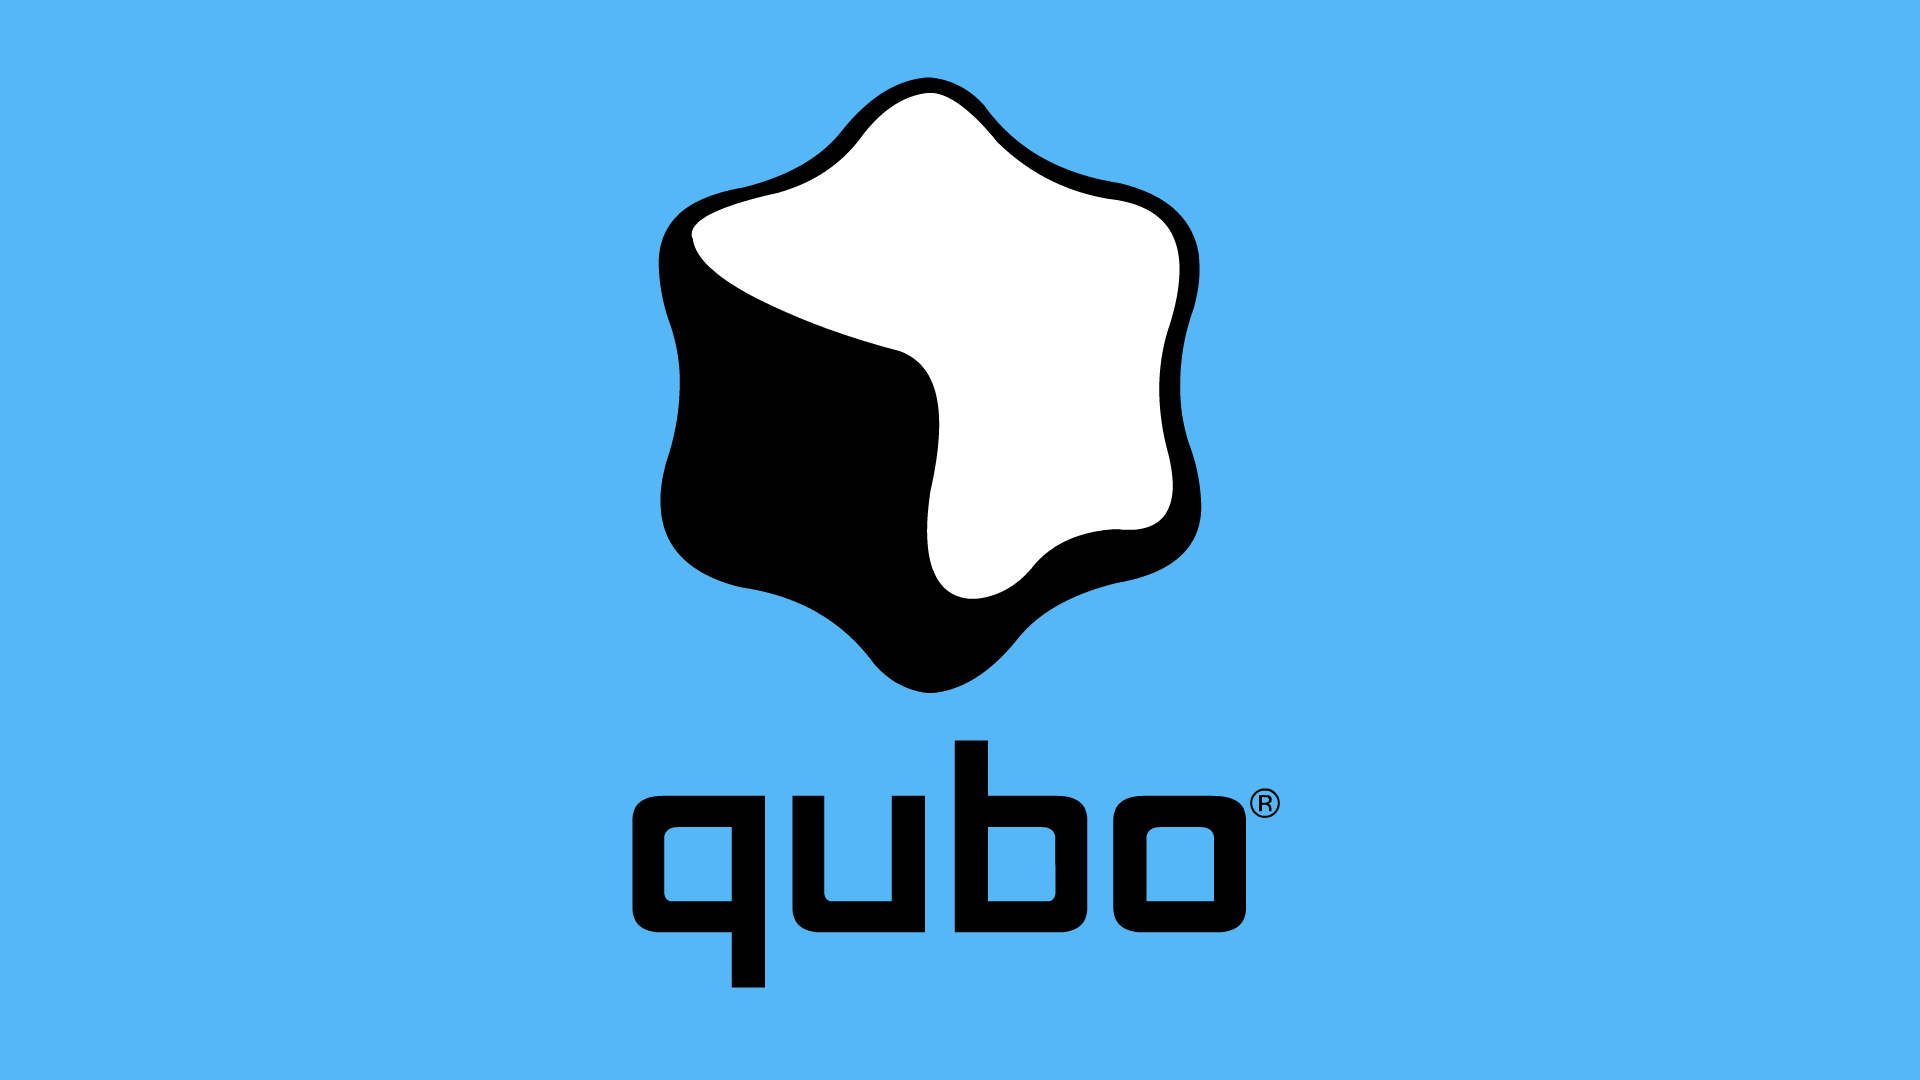 Old TeenNick Logo - Qubo | Logopedia | FANDOM powered by Wikia